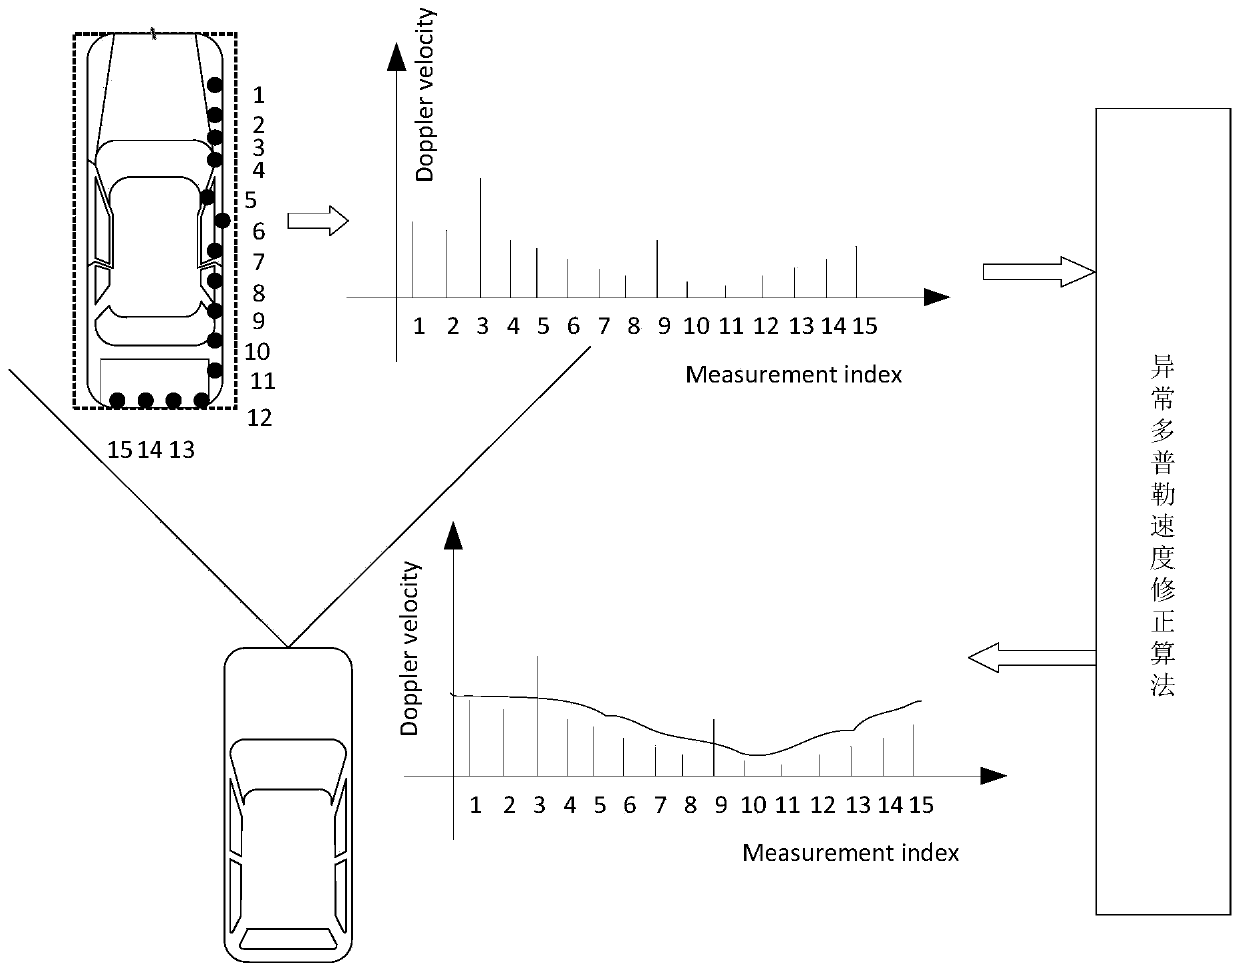 Extended target tracking method based on automobile radar